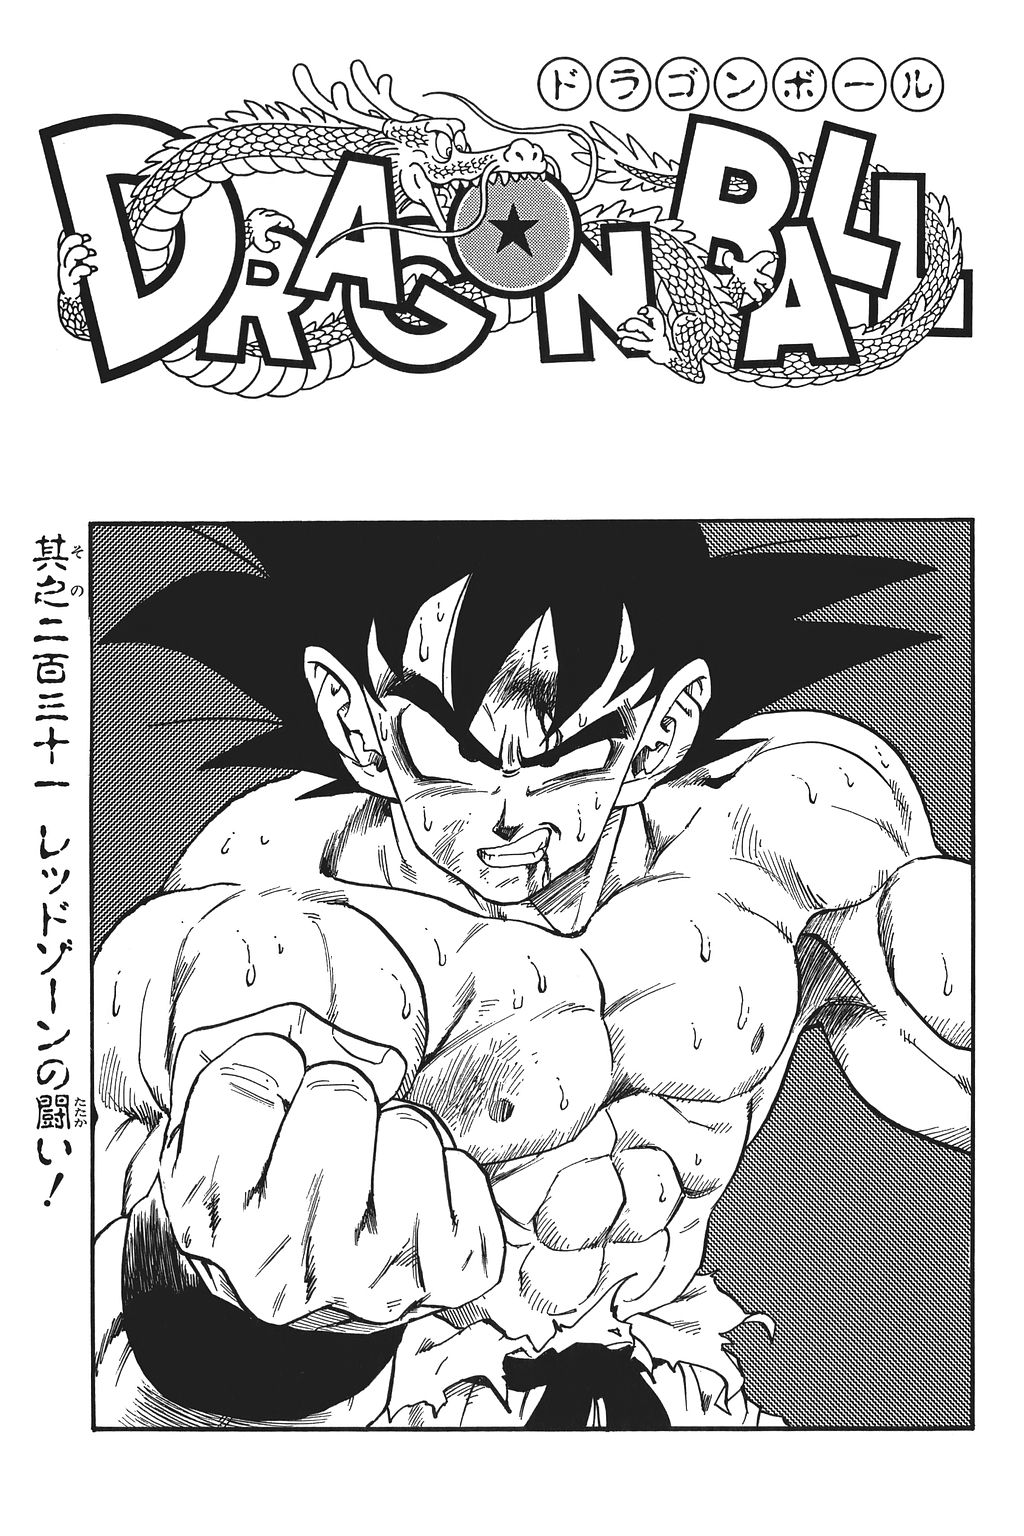 Dragon Ball Super Manga 93 RESUMEN COMPLETO, Goku vs Vegeta